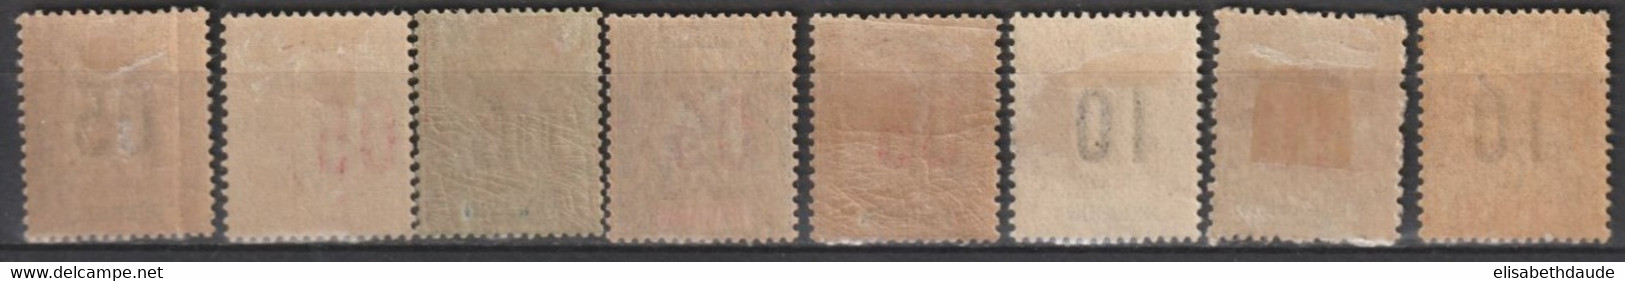 REUNION - 1912 - SERIE COMPLETE - YVERT N° 72/79 * MH (BELLE VARIETE DENTELURE DU 78 !) - COTE = 30+ EUR. - - Unused Stamps